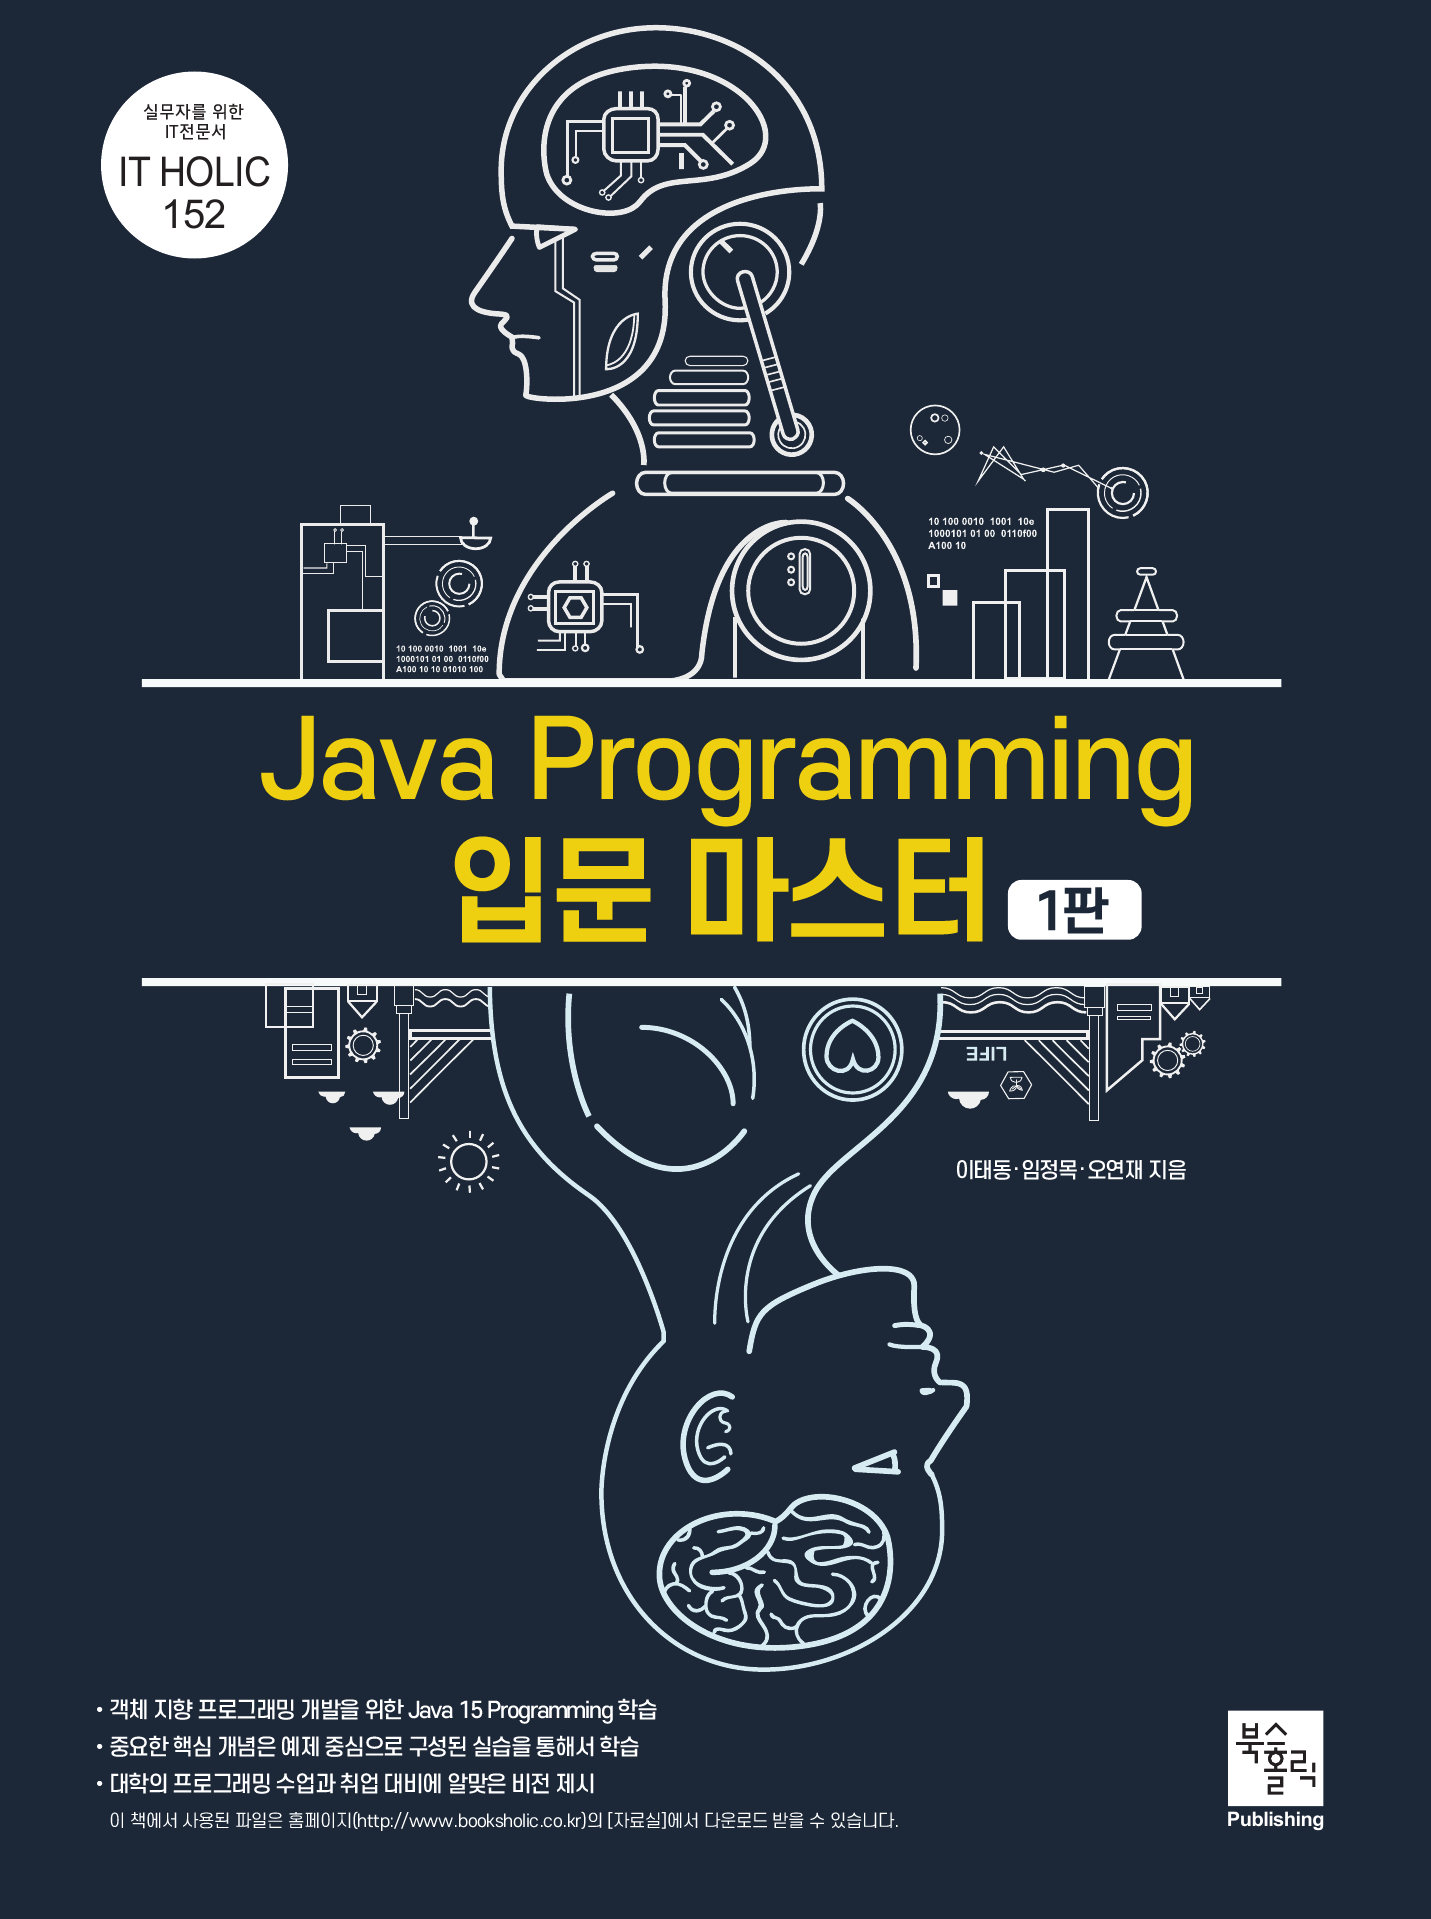 Java Programming 입문 마스터